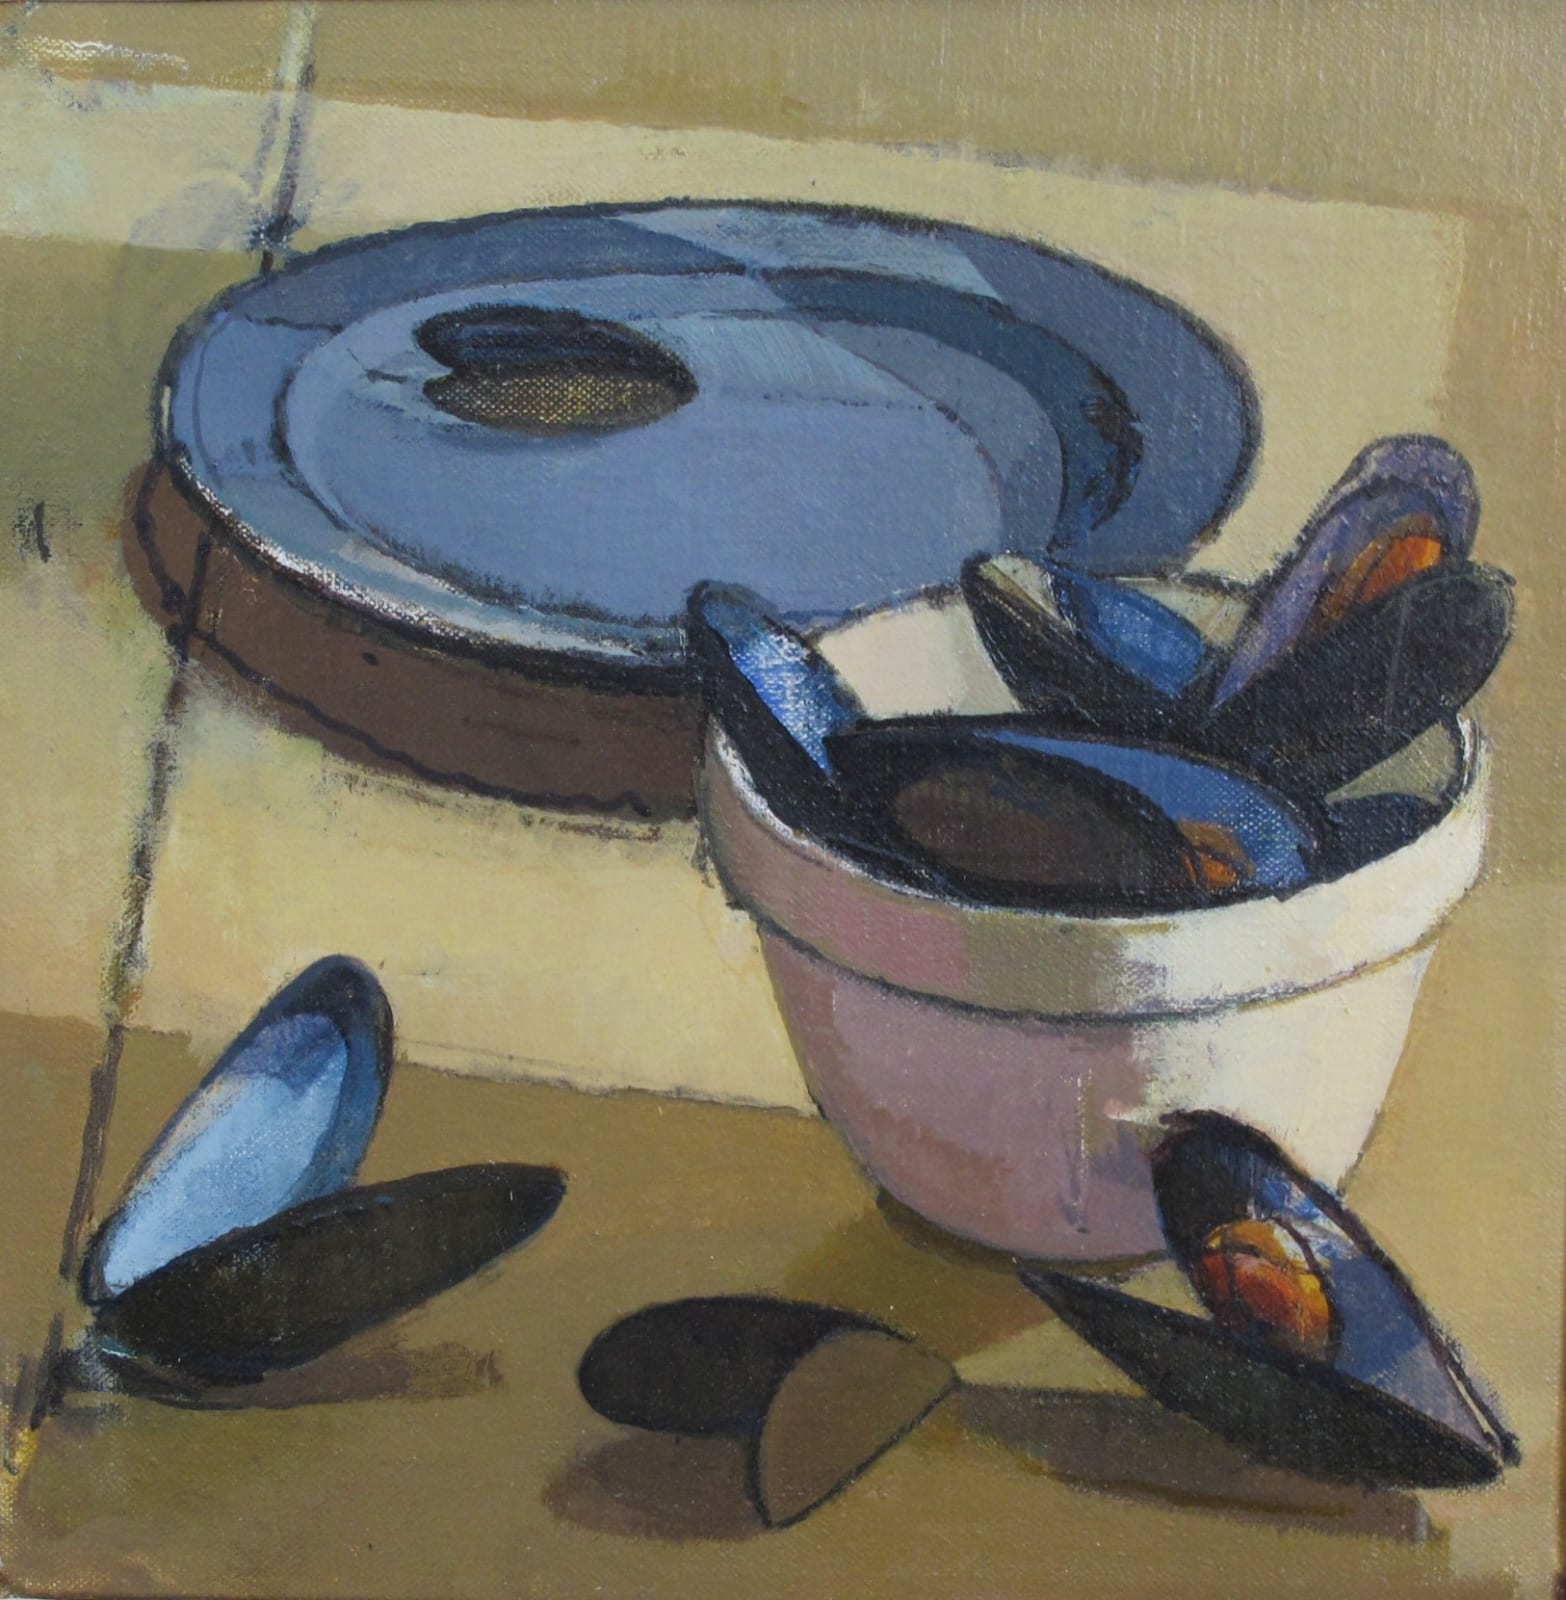 JANE PATTERSON, Mussels